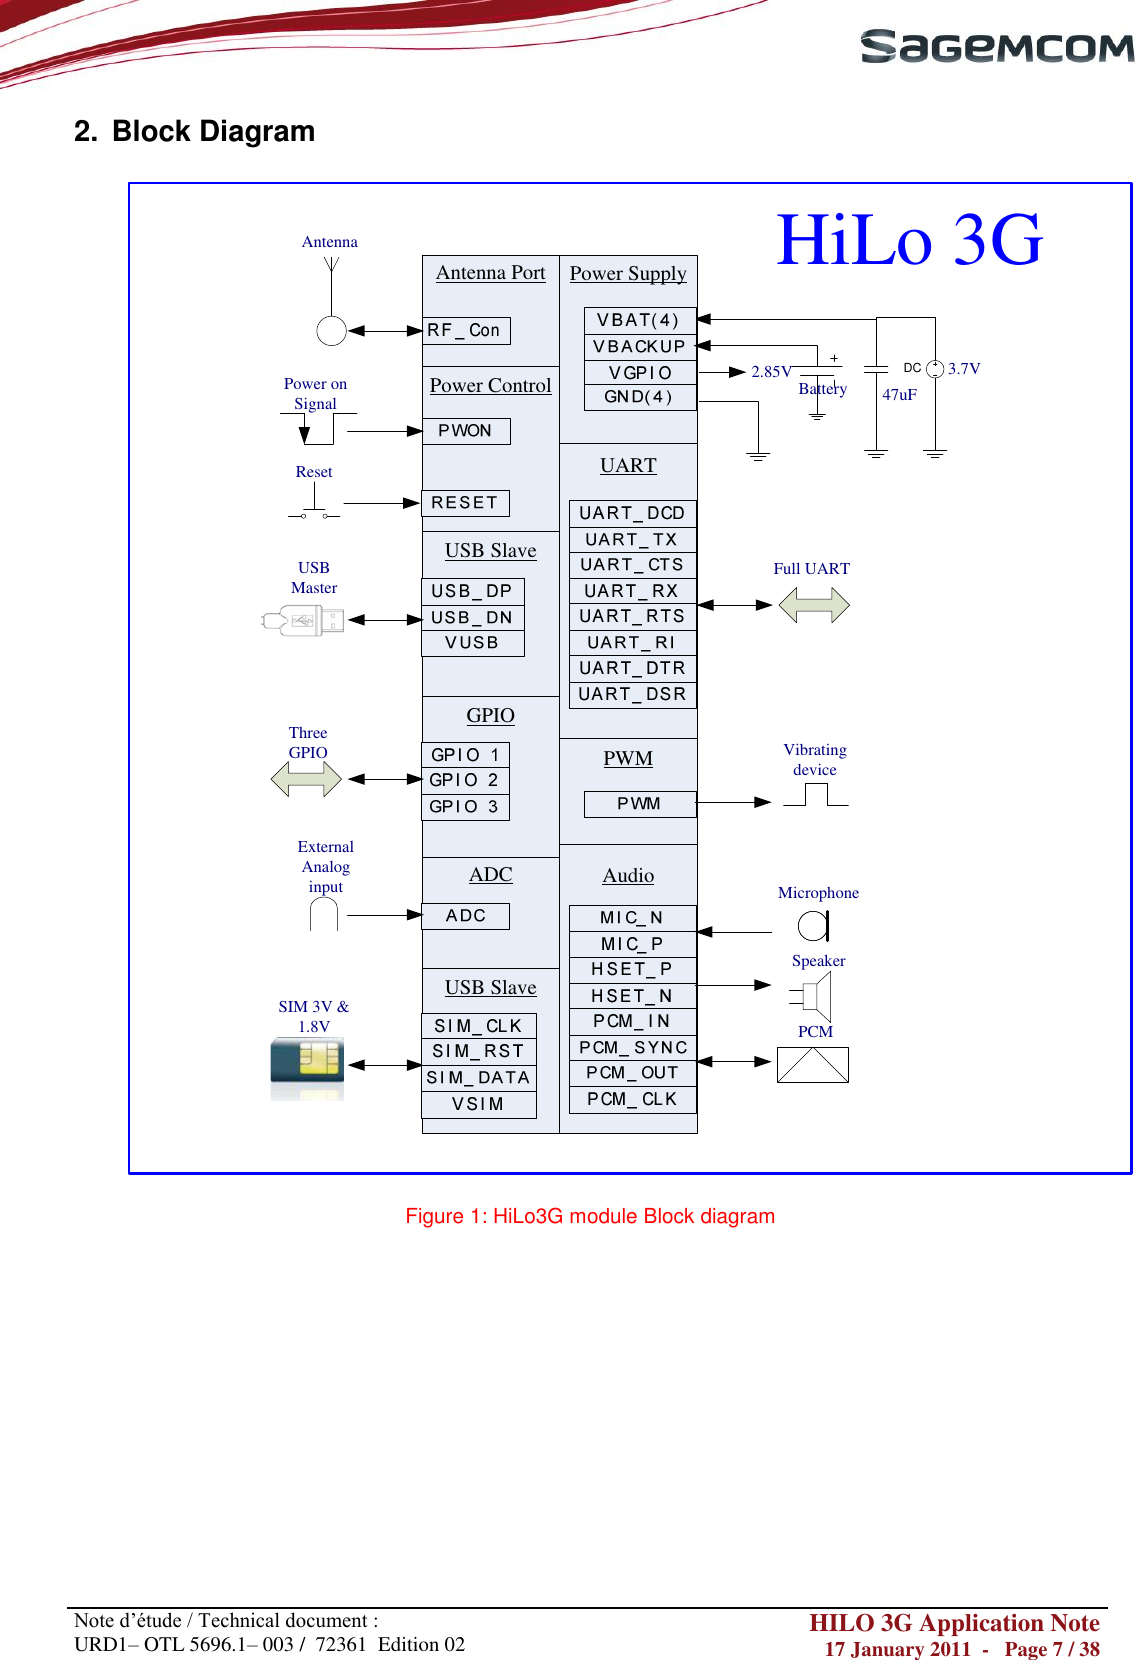       Note d‘étude / Technical document : URD1– OTL 5696.1– 003 /  72361  Edition 02 HILO 3G Application Note 17 January 2011  -   Page 7 / 38    2.  Block Diagram  Antenna PortPower ControlAntennaPower on SignalResetUSB SlaveUSB MasterGPIOThree GPIOADCExternal Analog inputUSB SlaveSIM 3V &amp; 1.8VPower Supply47uFDC 3.7VBattery2.85VUARTFull UARTPWMAudioHiLo 3GVibrating deviceMicrophoneSpeakerPCM  Figure 1: HiLo3G module Block diagram                